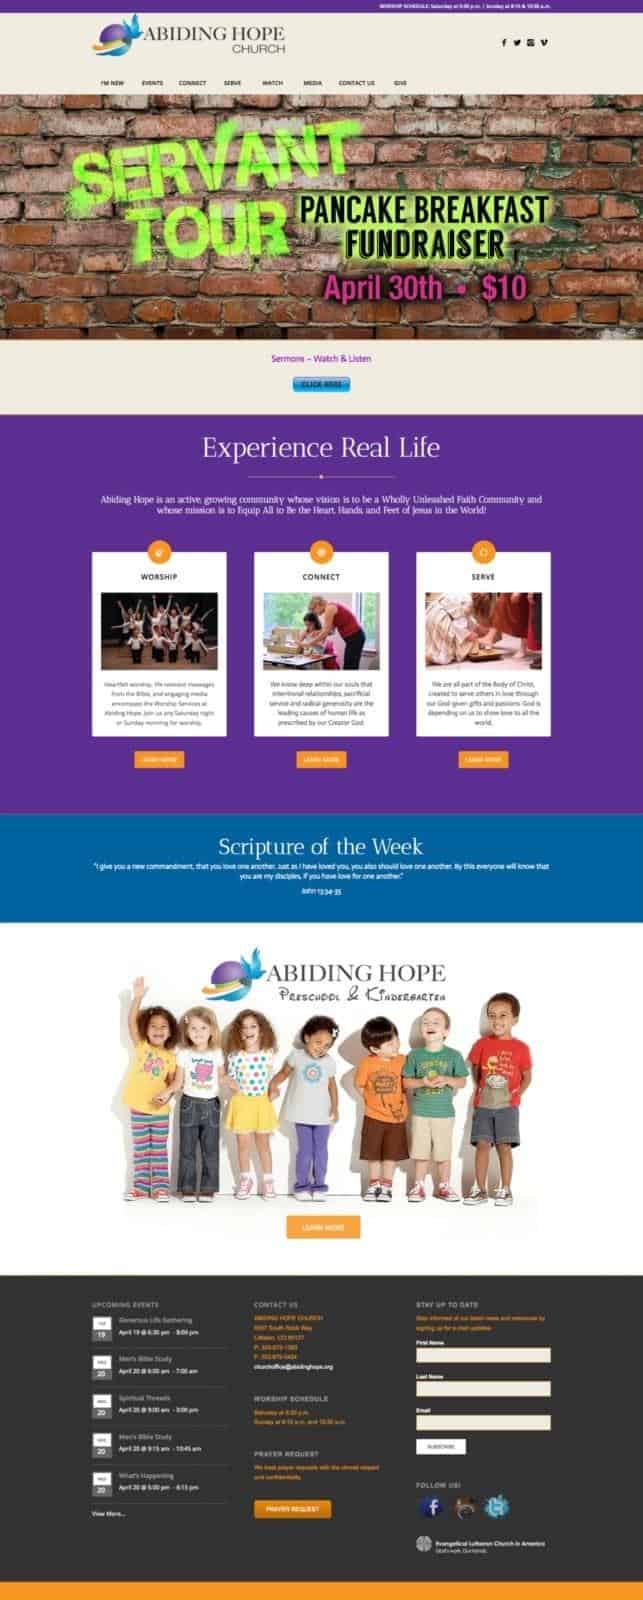 WOW Factor Digital Marketing Agency - Abiding Hope Website